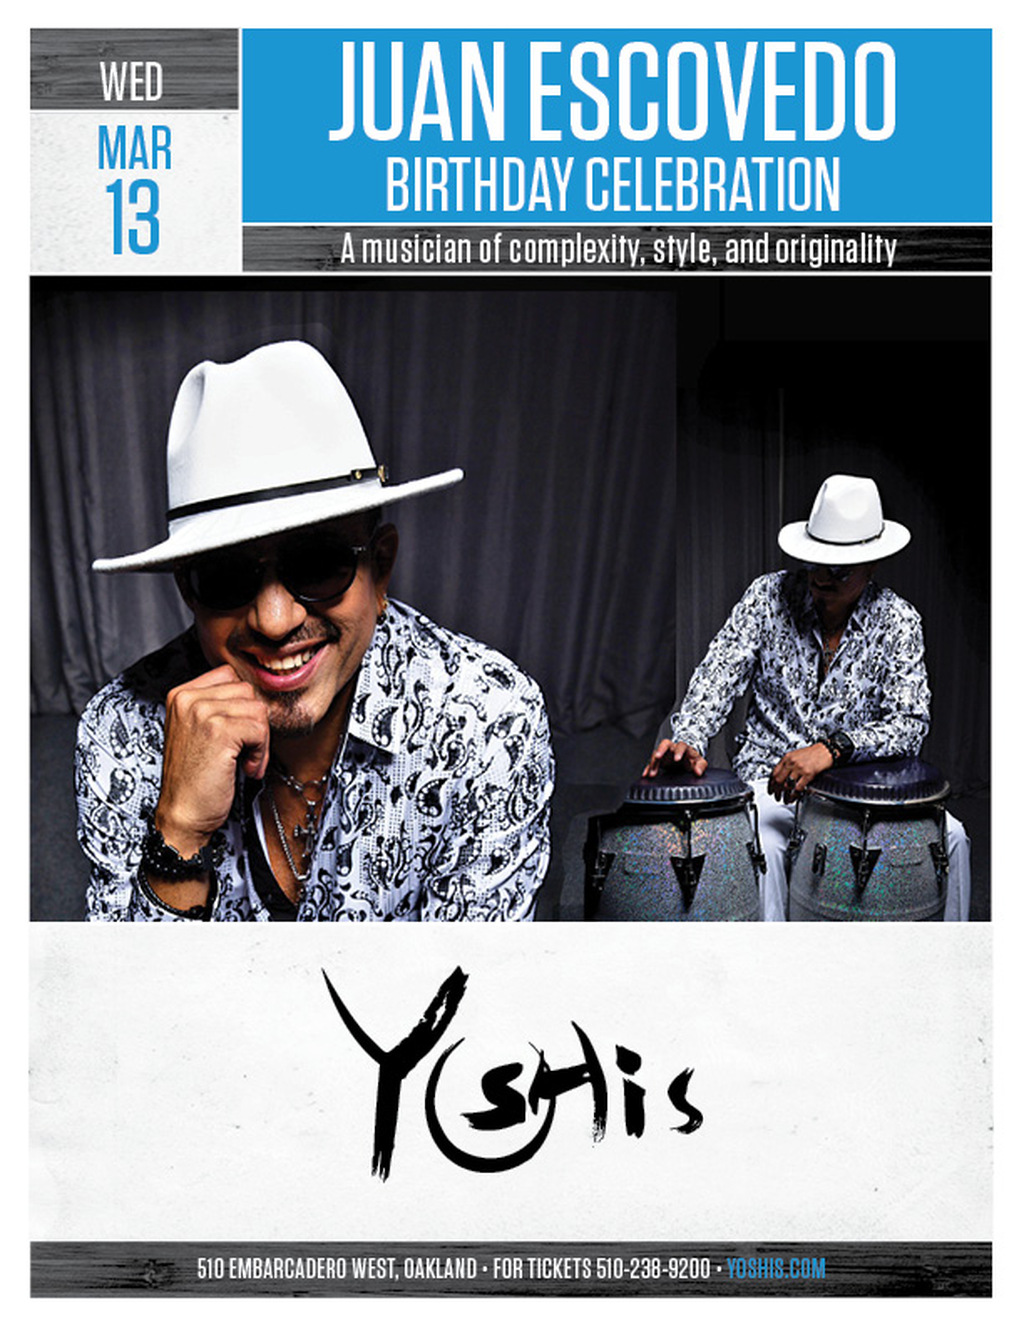 Yoshi s Join Us for WED JUAN ESCUVEDU s MAR BIRTHDAY CELEBRATION at Yoshi s Oakland  promotion flier on Digifli com